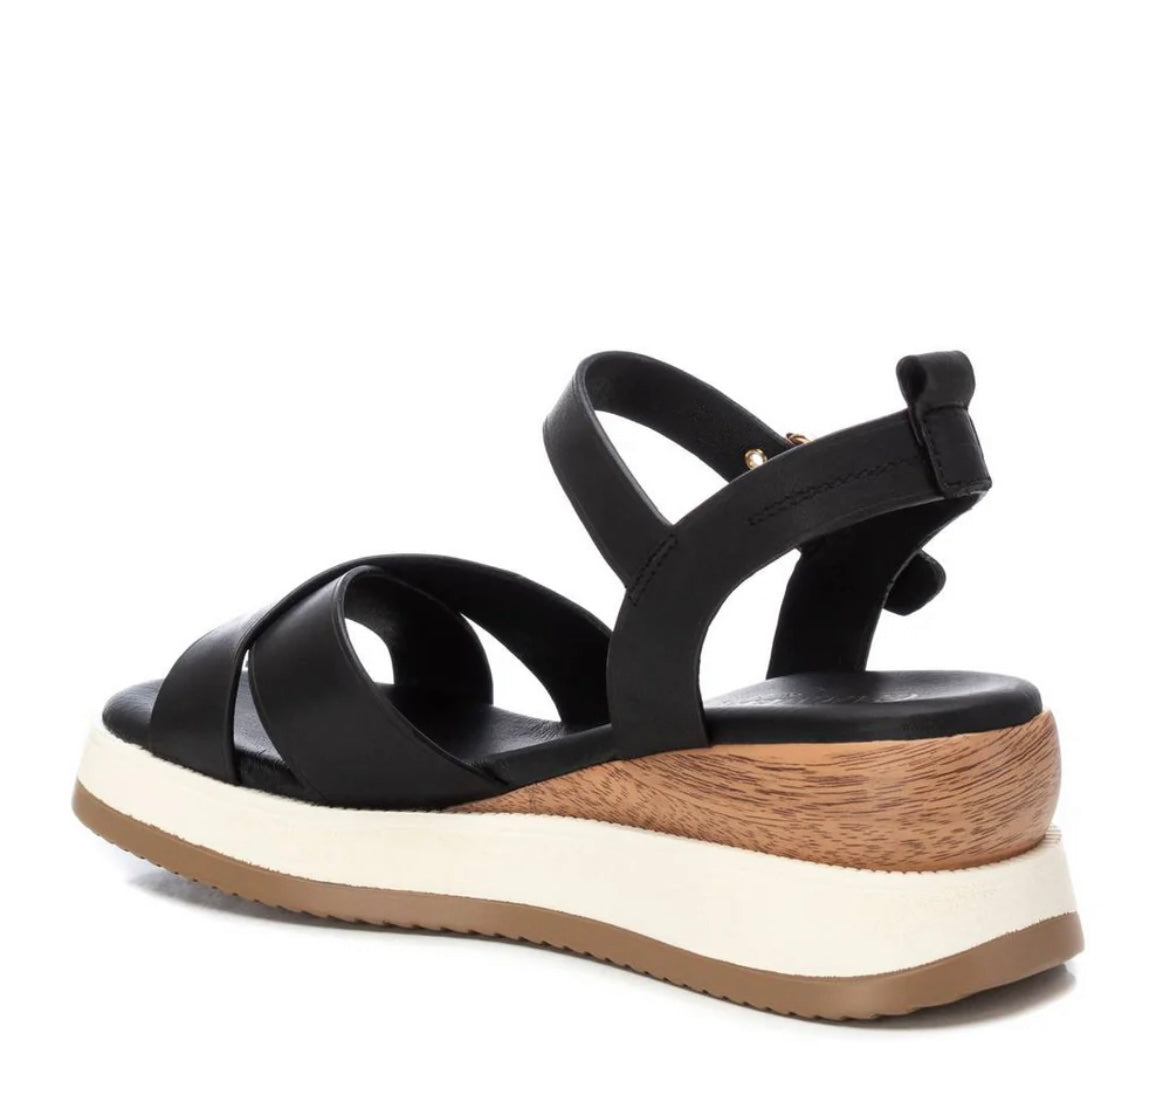 Carmela black leather wedge sandals